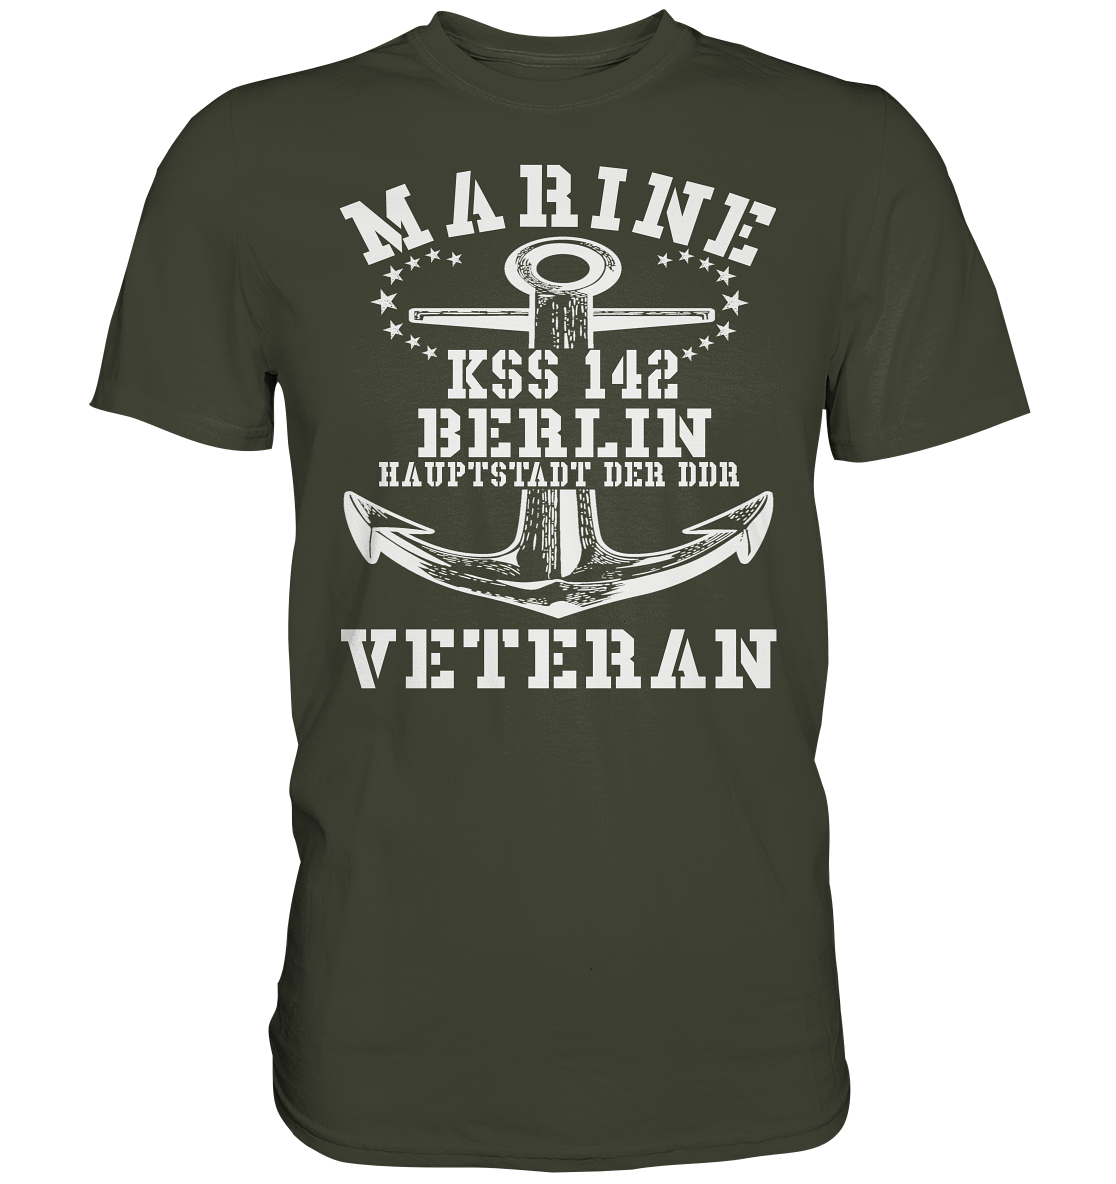 KSS 142 BERLIN - HAUPTSTADT DER DDR Marine Veteran - Premium Shirt